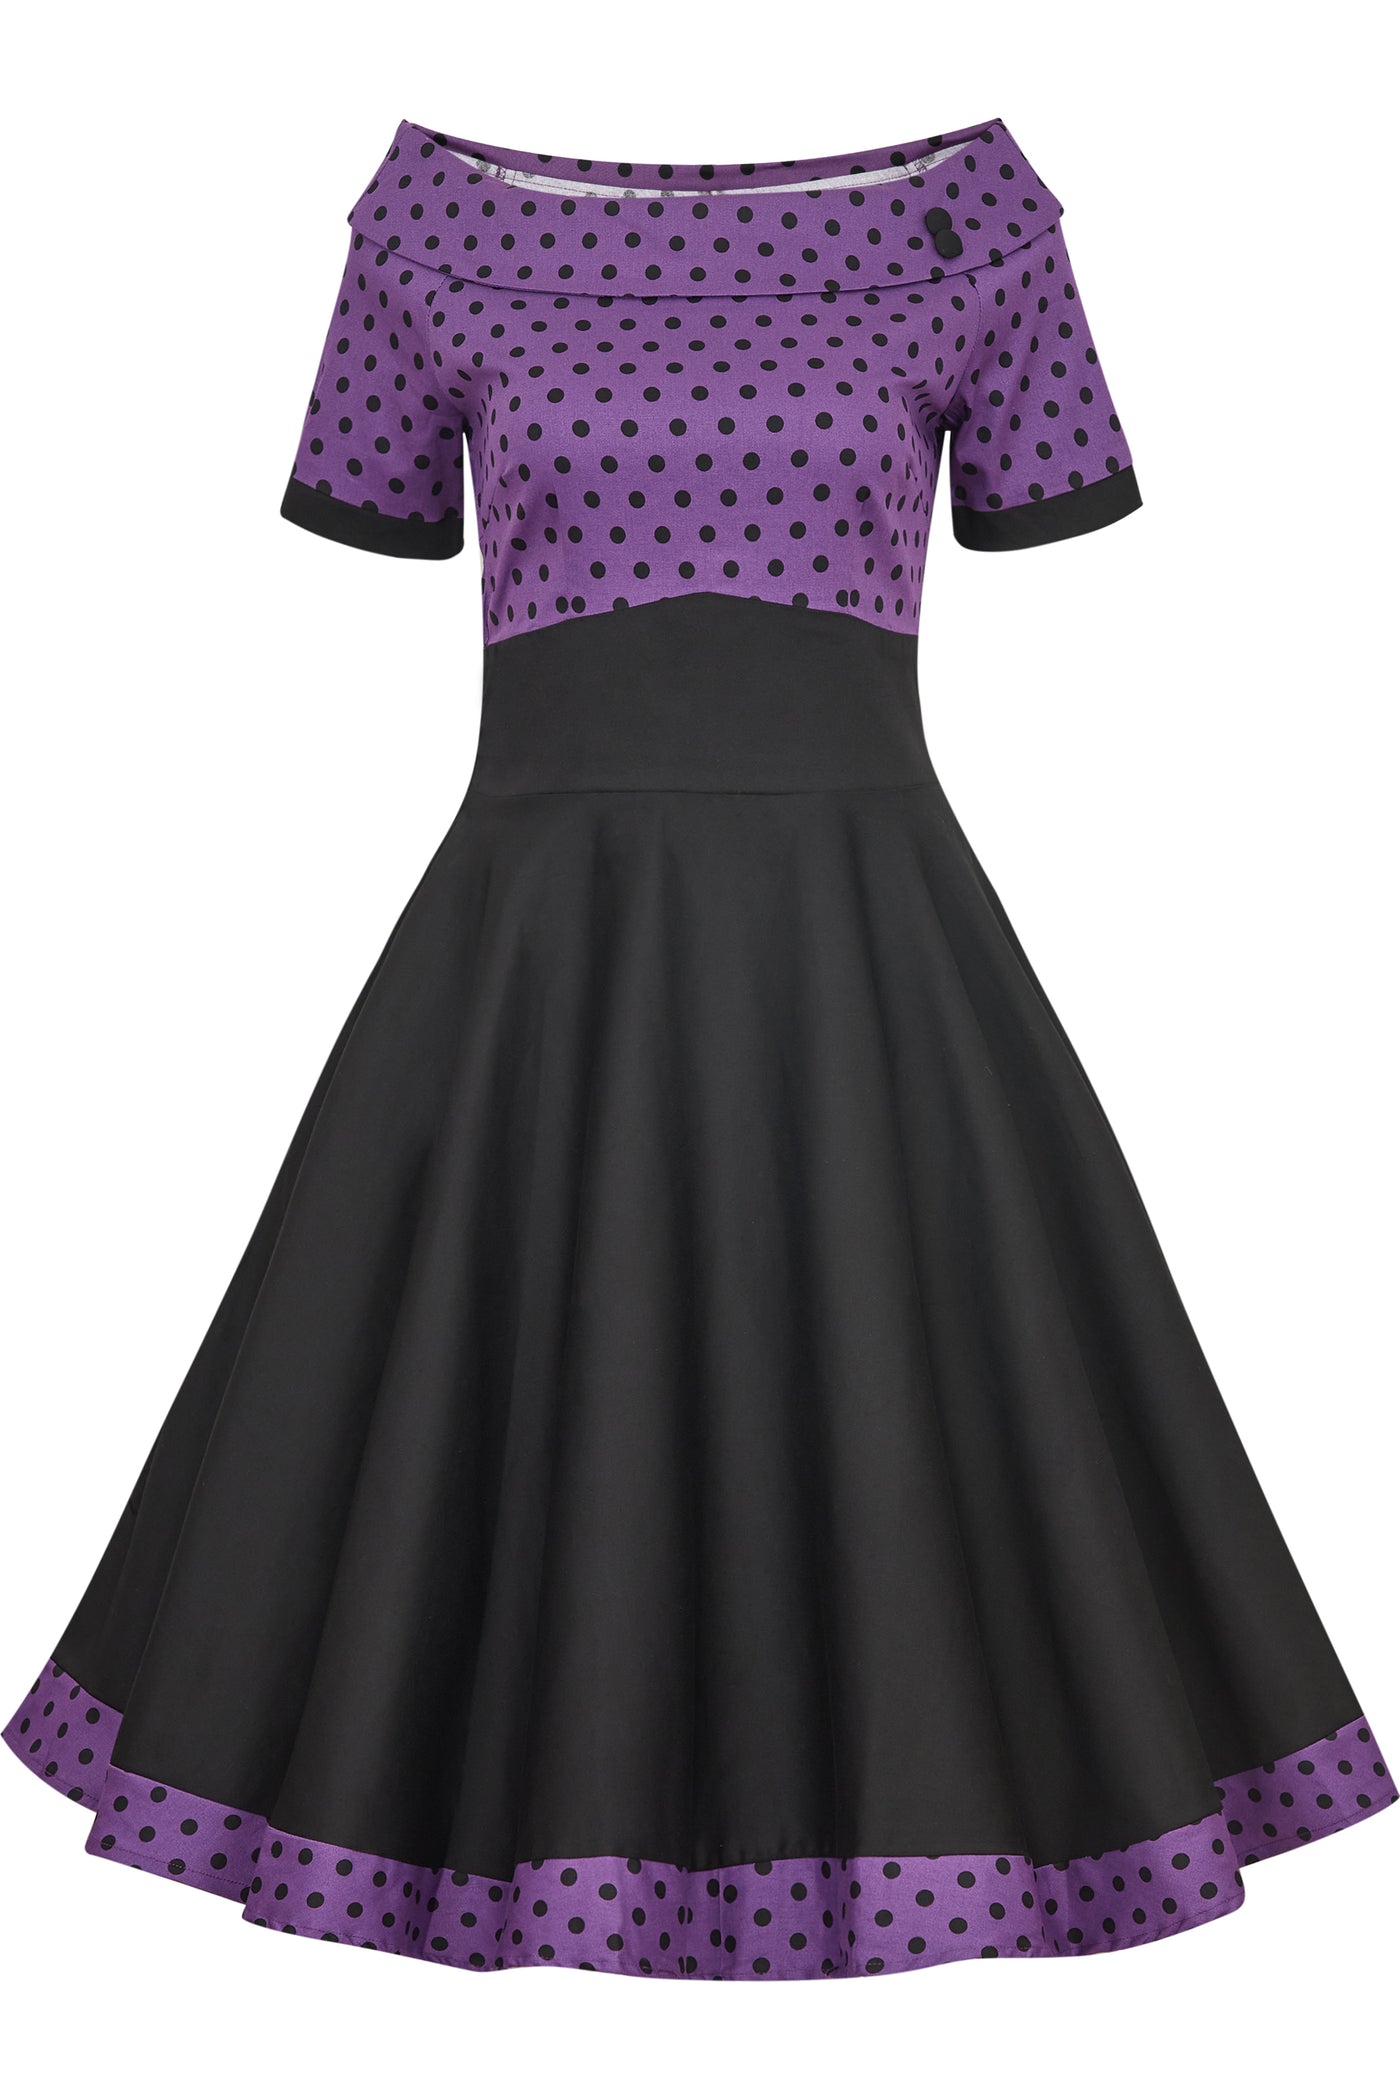 Plus Size Retro Purple and Black Polka Dot Circle Dress front view